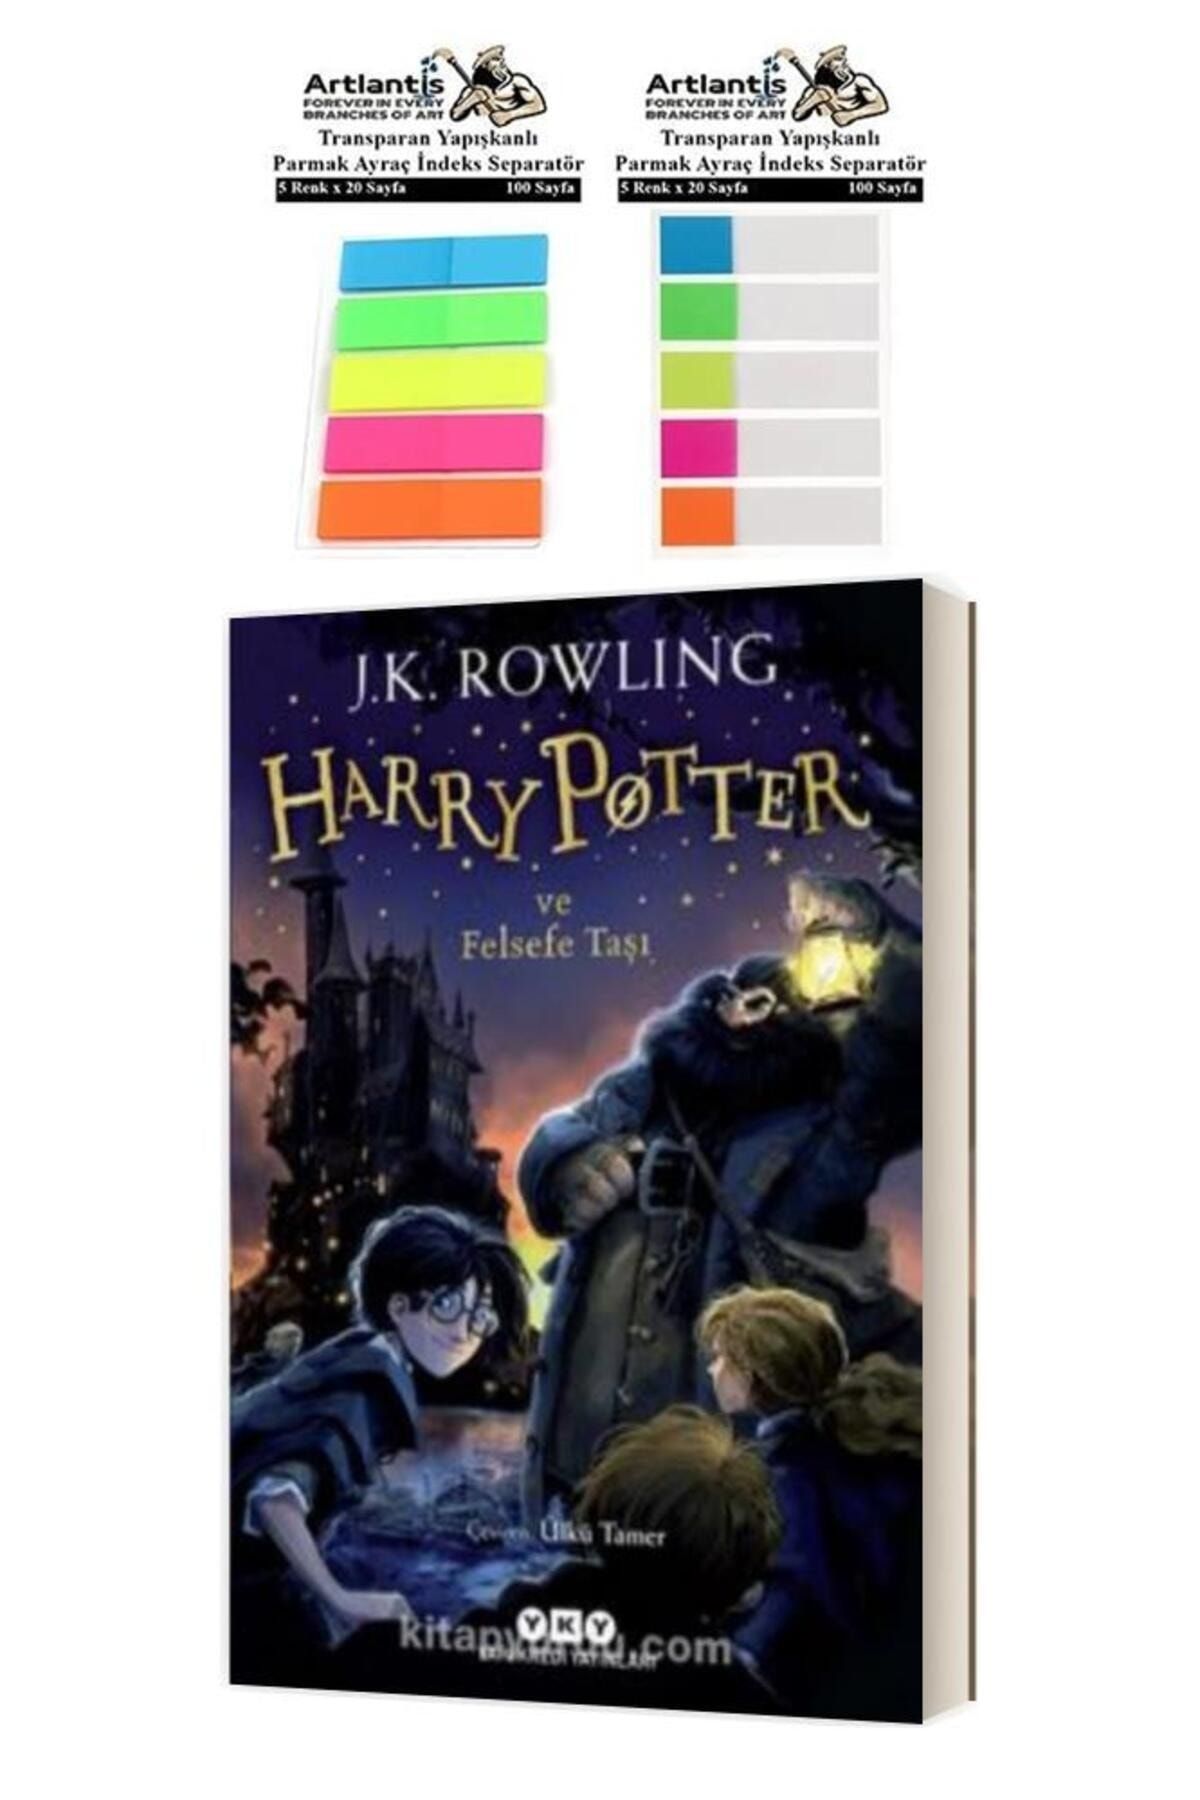 Artlantis Harry Potter 1 Felsefe Taşı 276 Sayfa 1 Adet Transparan Kitap Ayraç 2 Paket Hary Poter ve Felsefe Ta